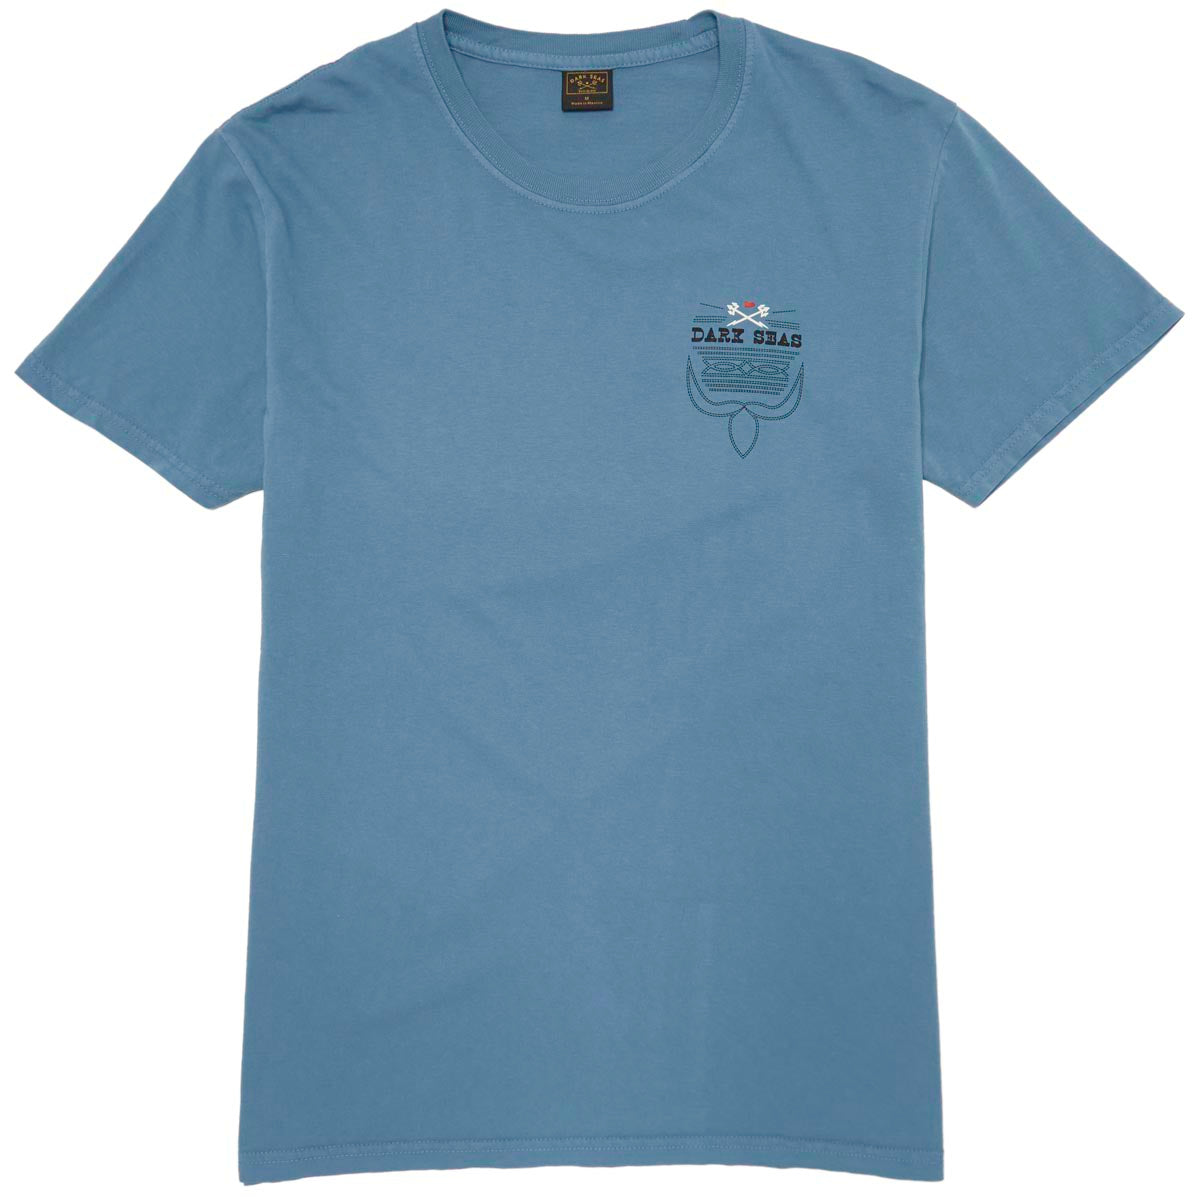 Dark Seas Tumbleweed T-Shirt - Blue Fin image 2